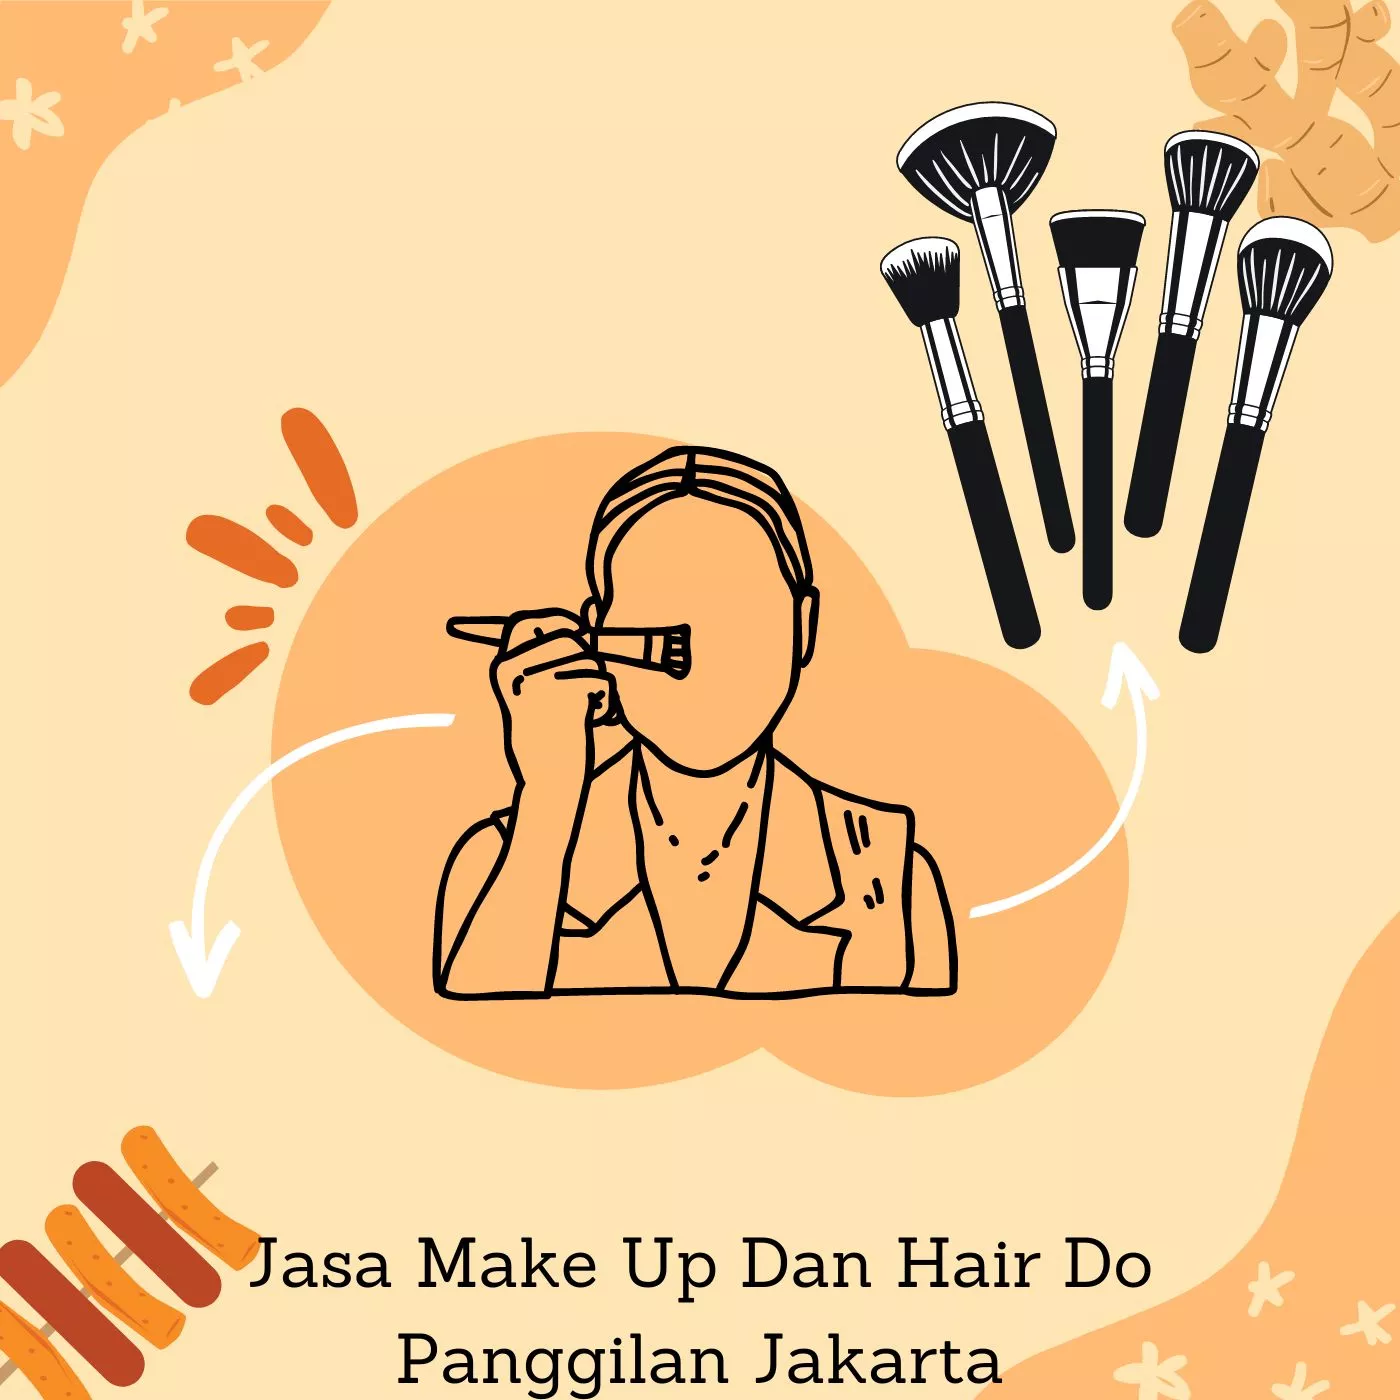 Jasa Make Up Dan Hair Do Panggilan Jakarta